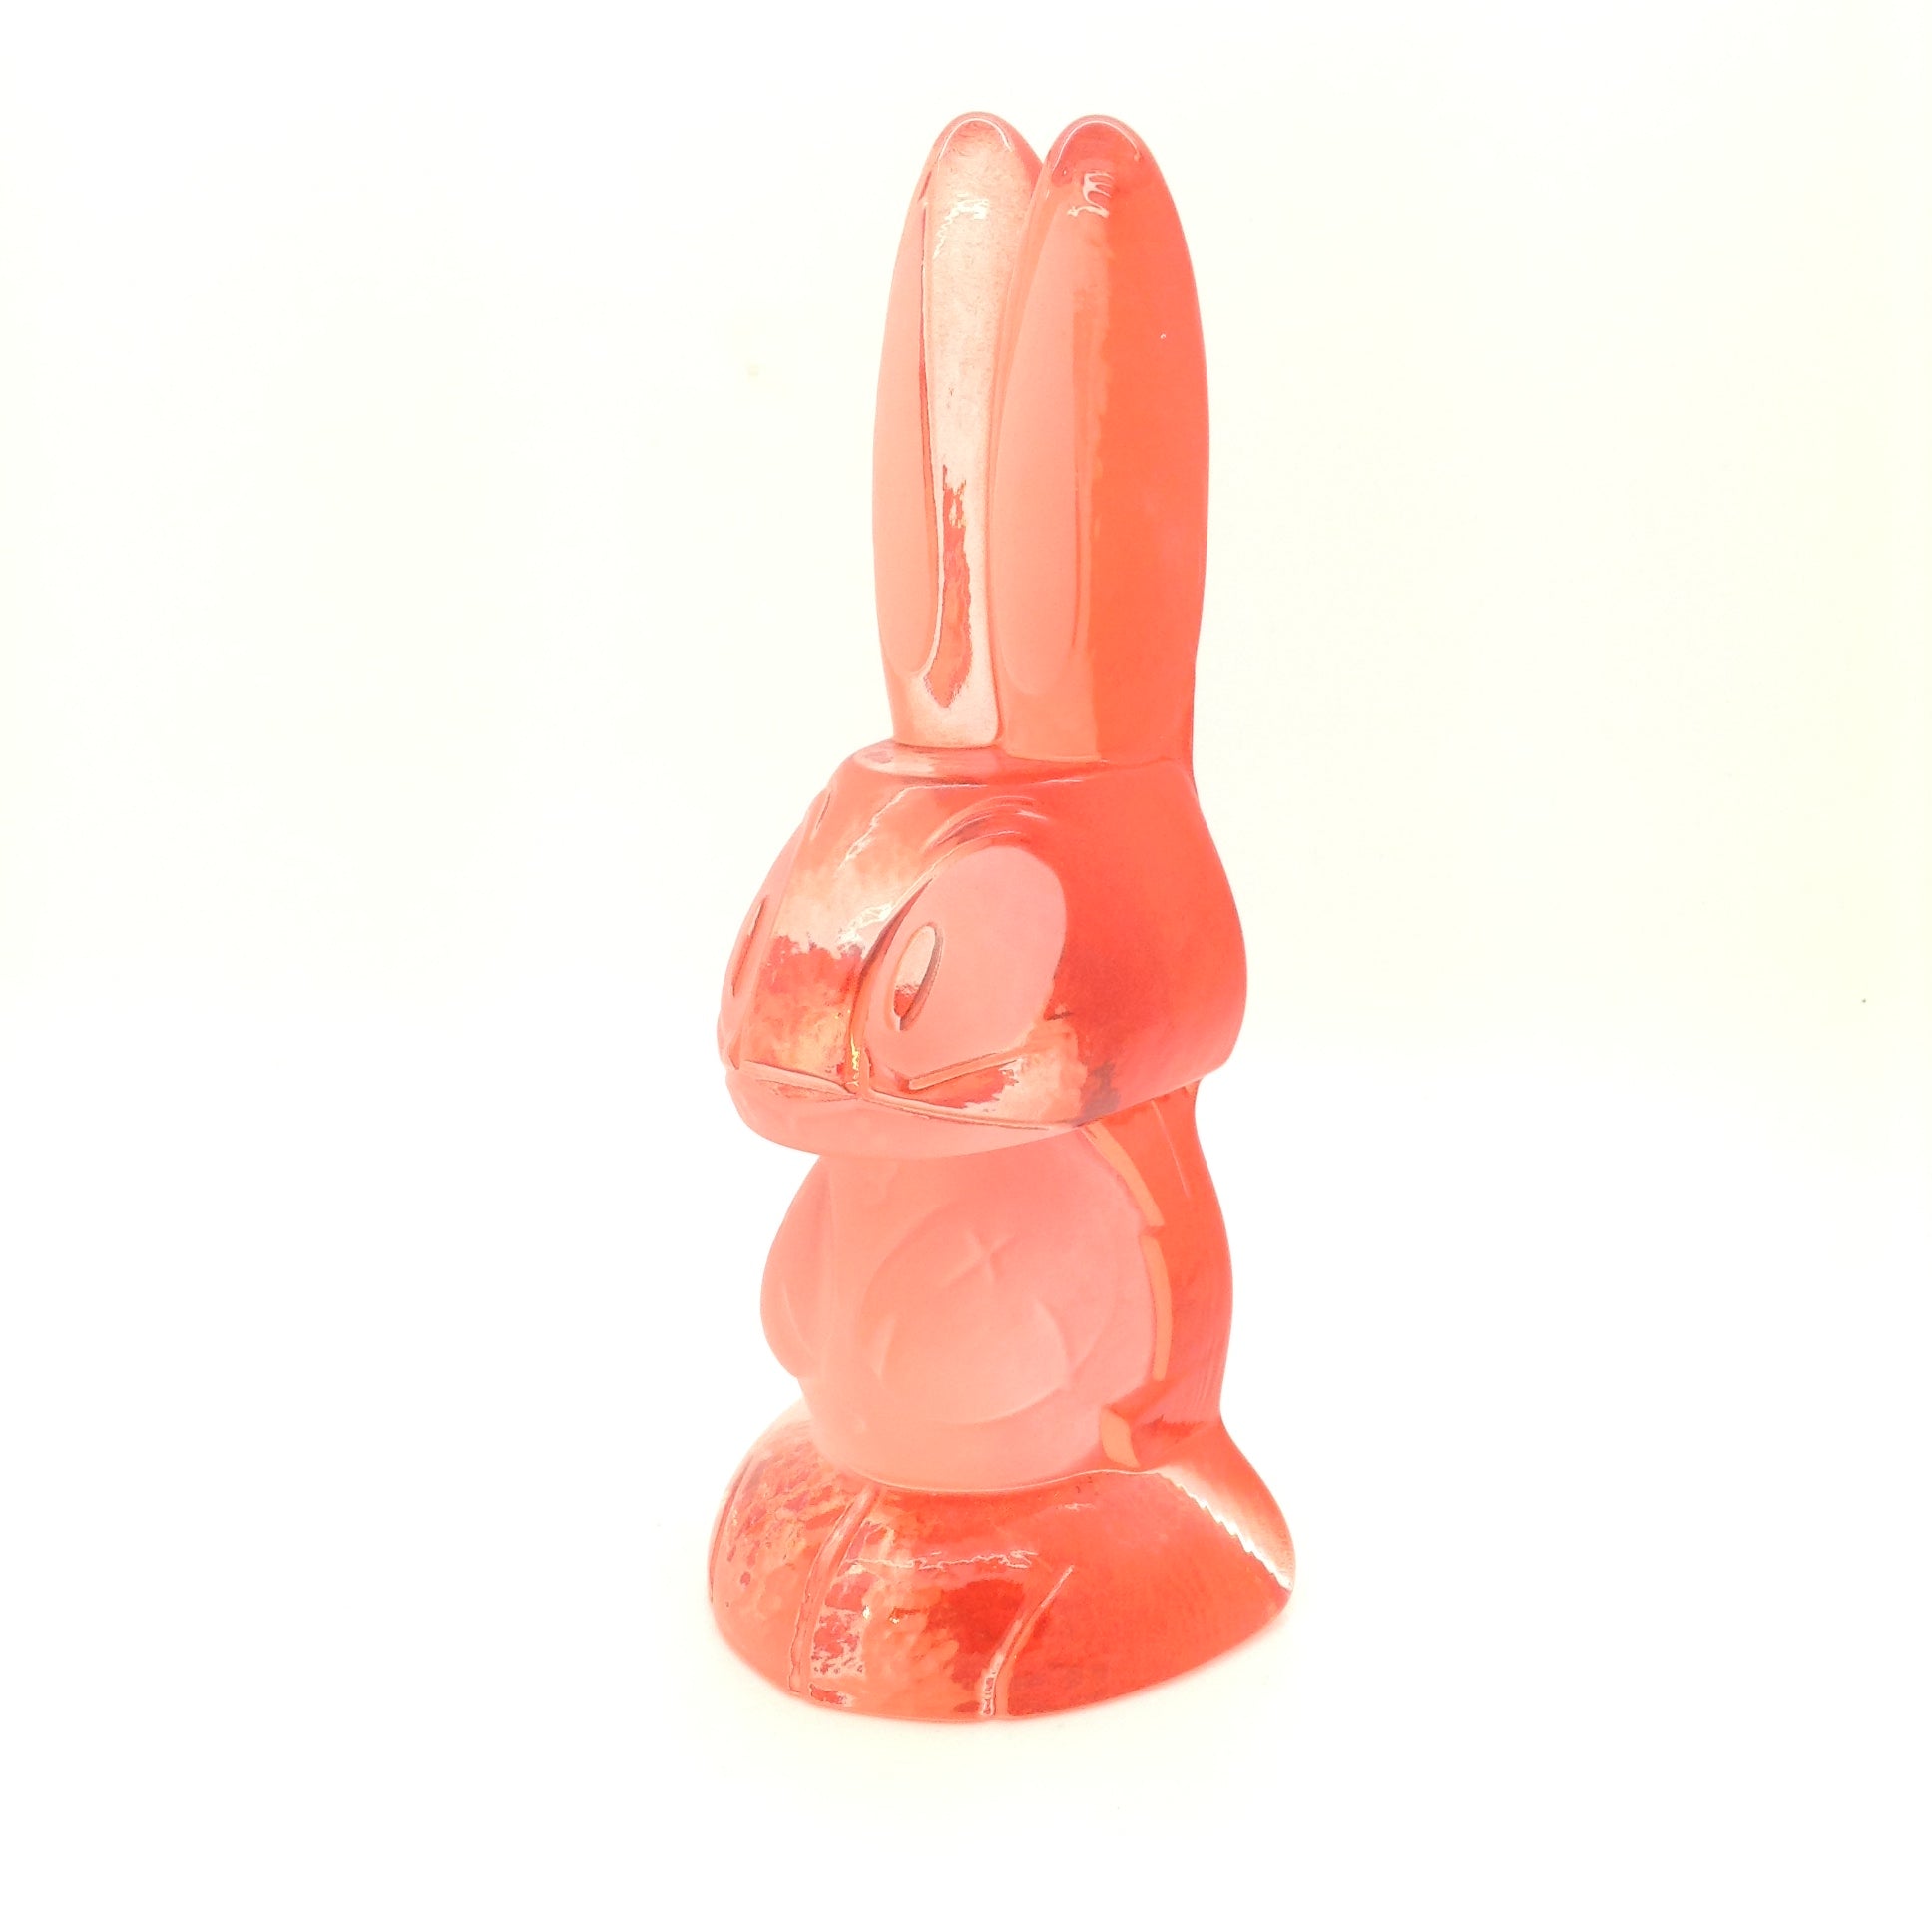 Mr. Bunny Art Toy Figure by Joe Ledbetter x Ikea Art Event 2018